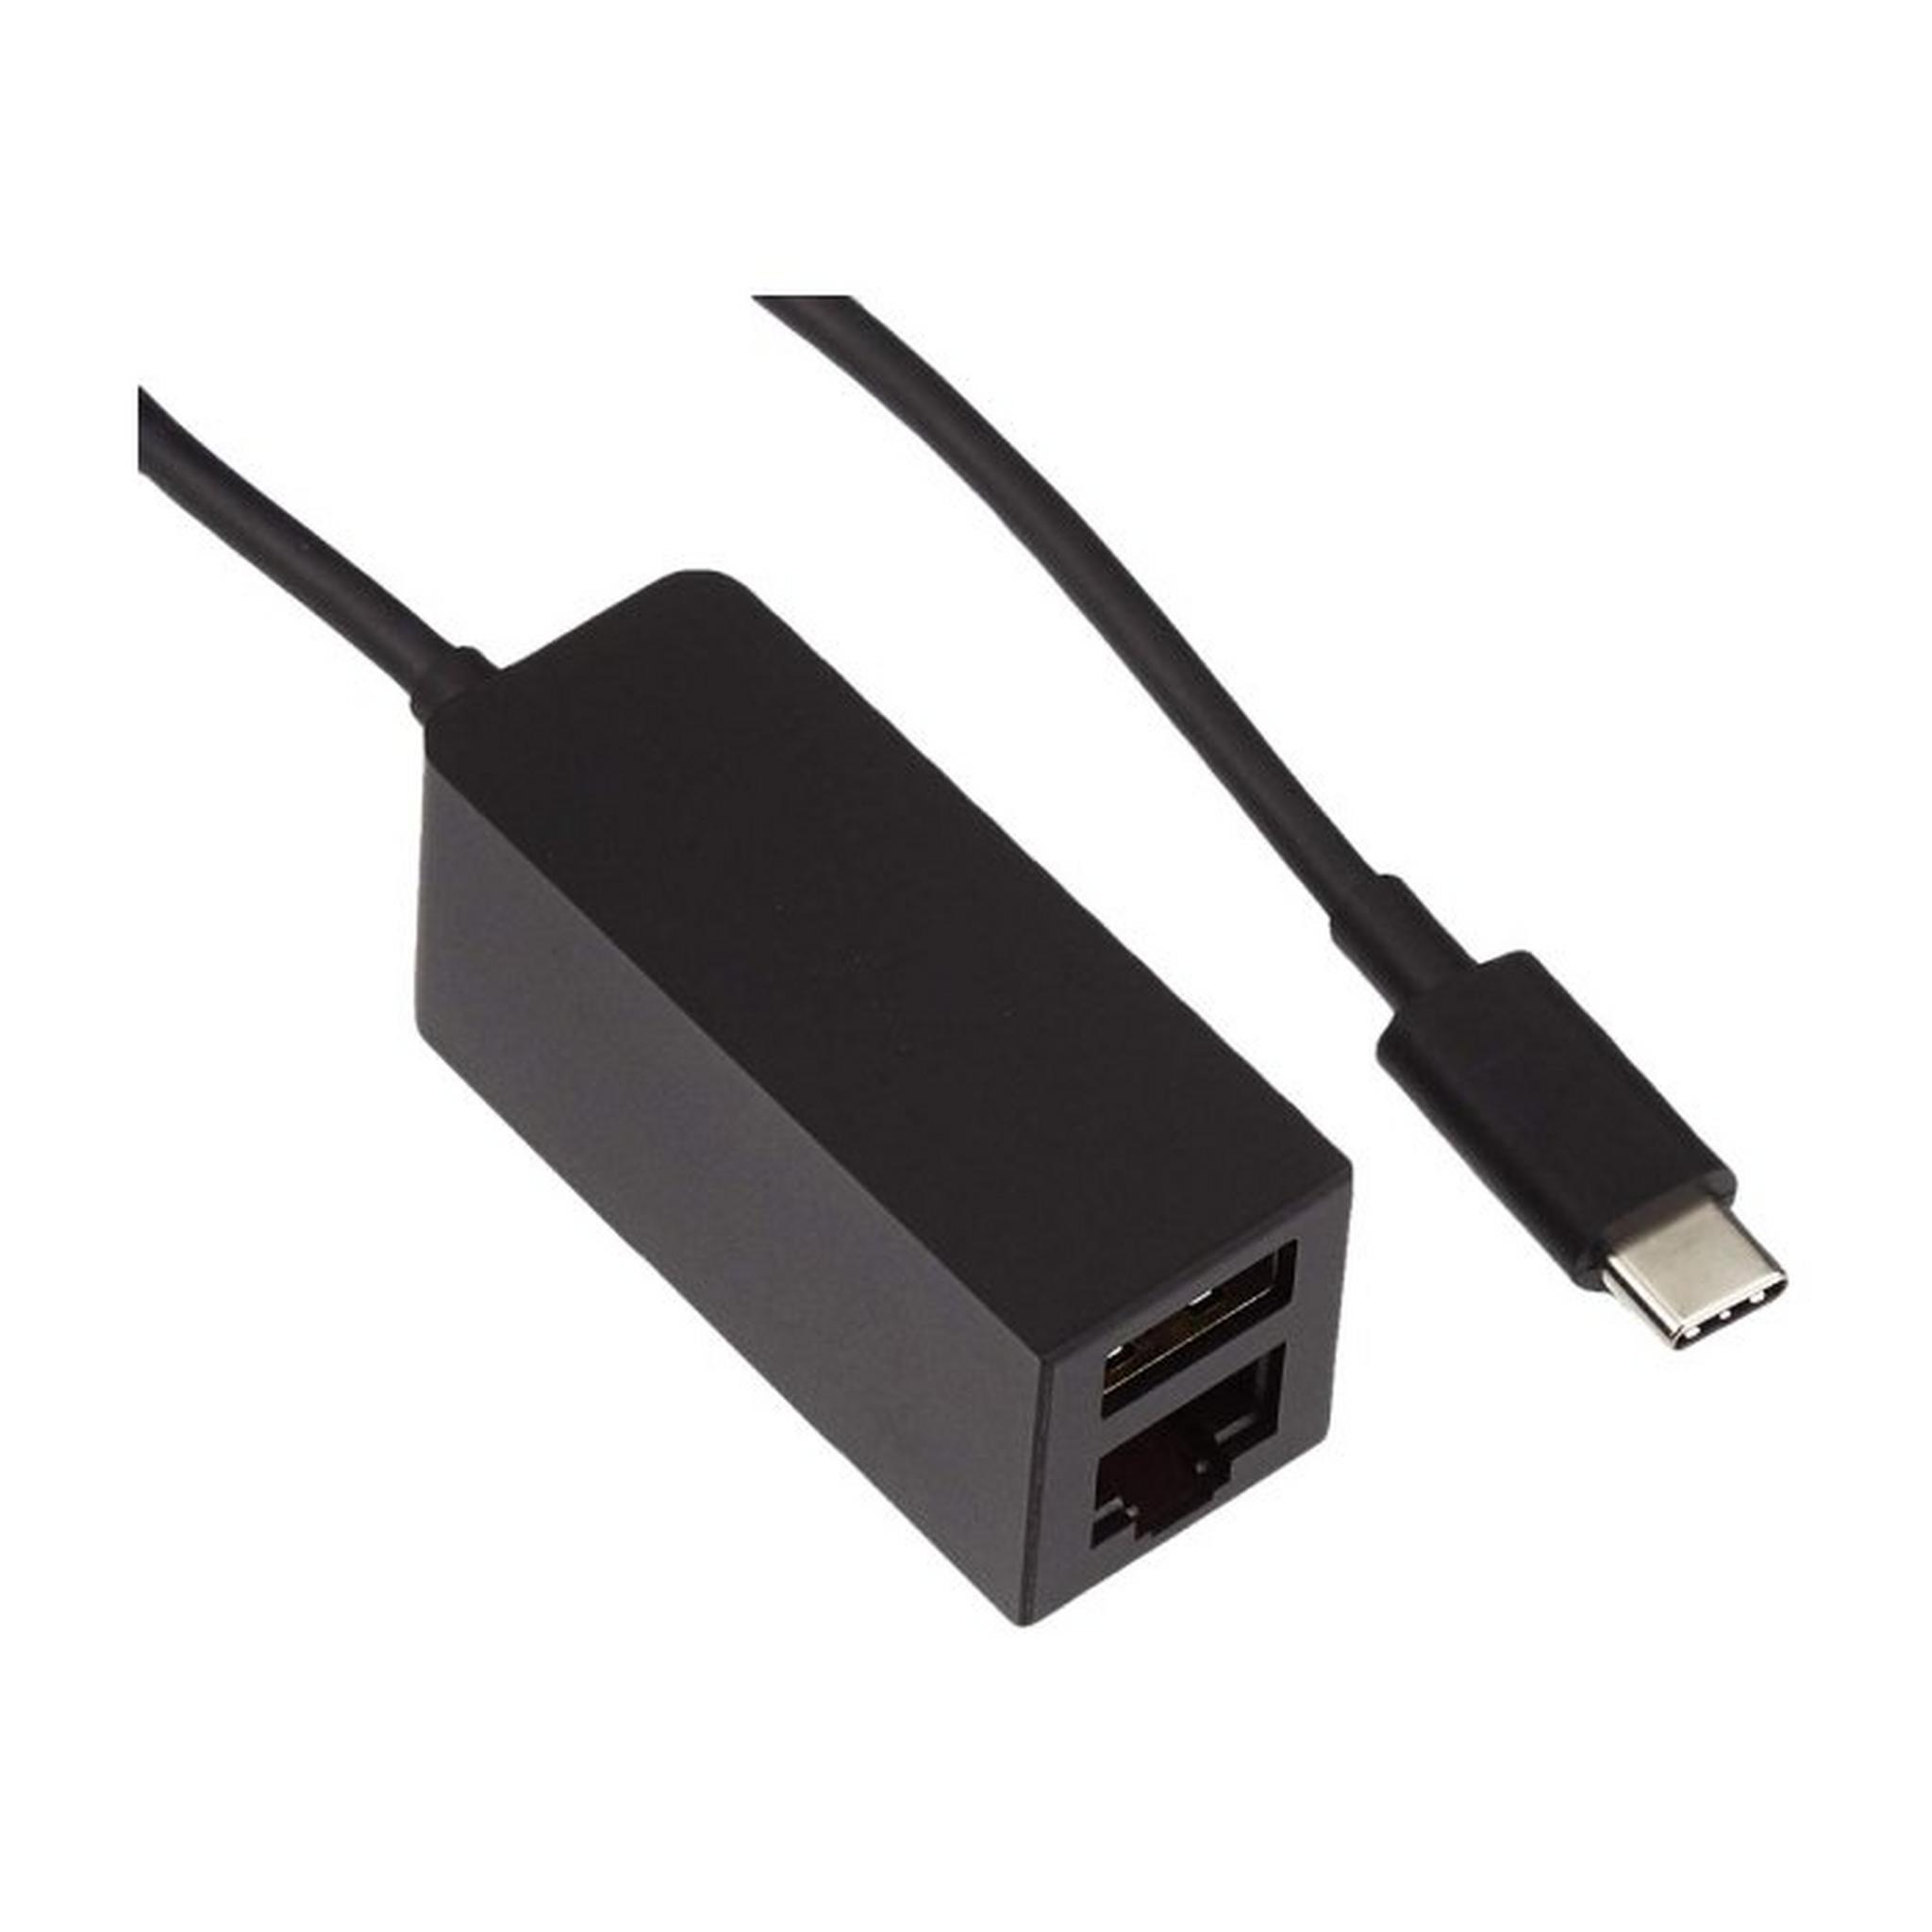 Microsoft Surface USB-C to Ethernet Adaptor - Black